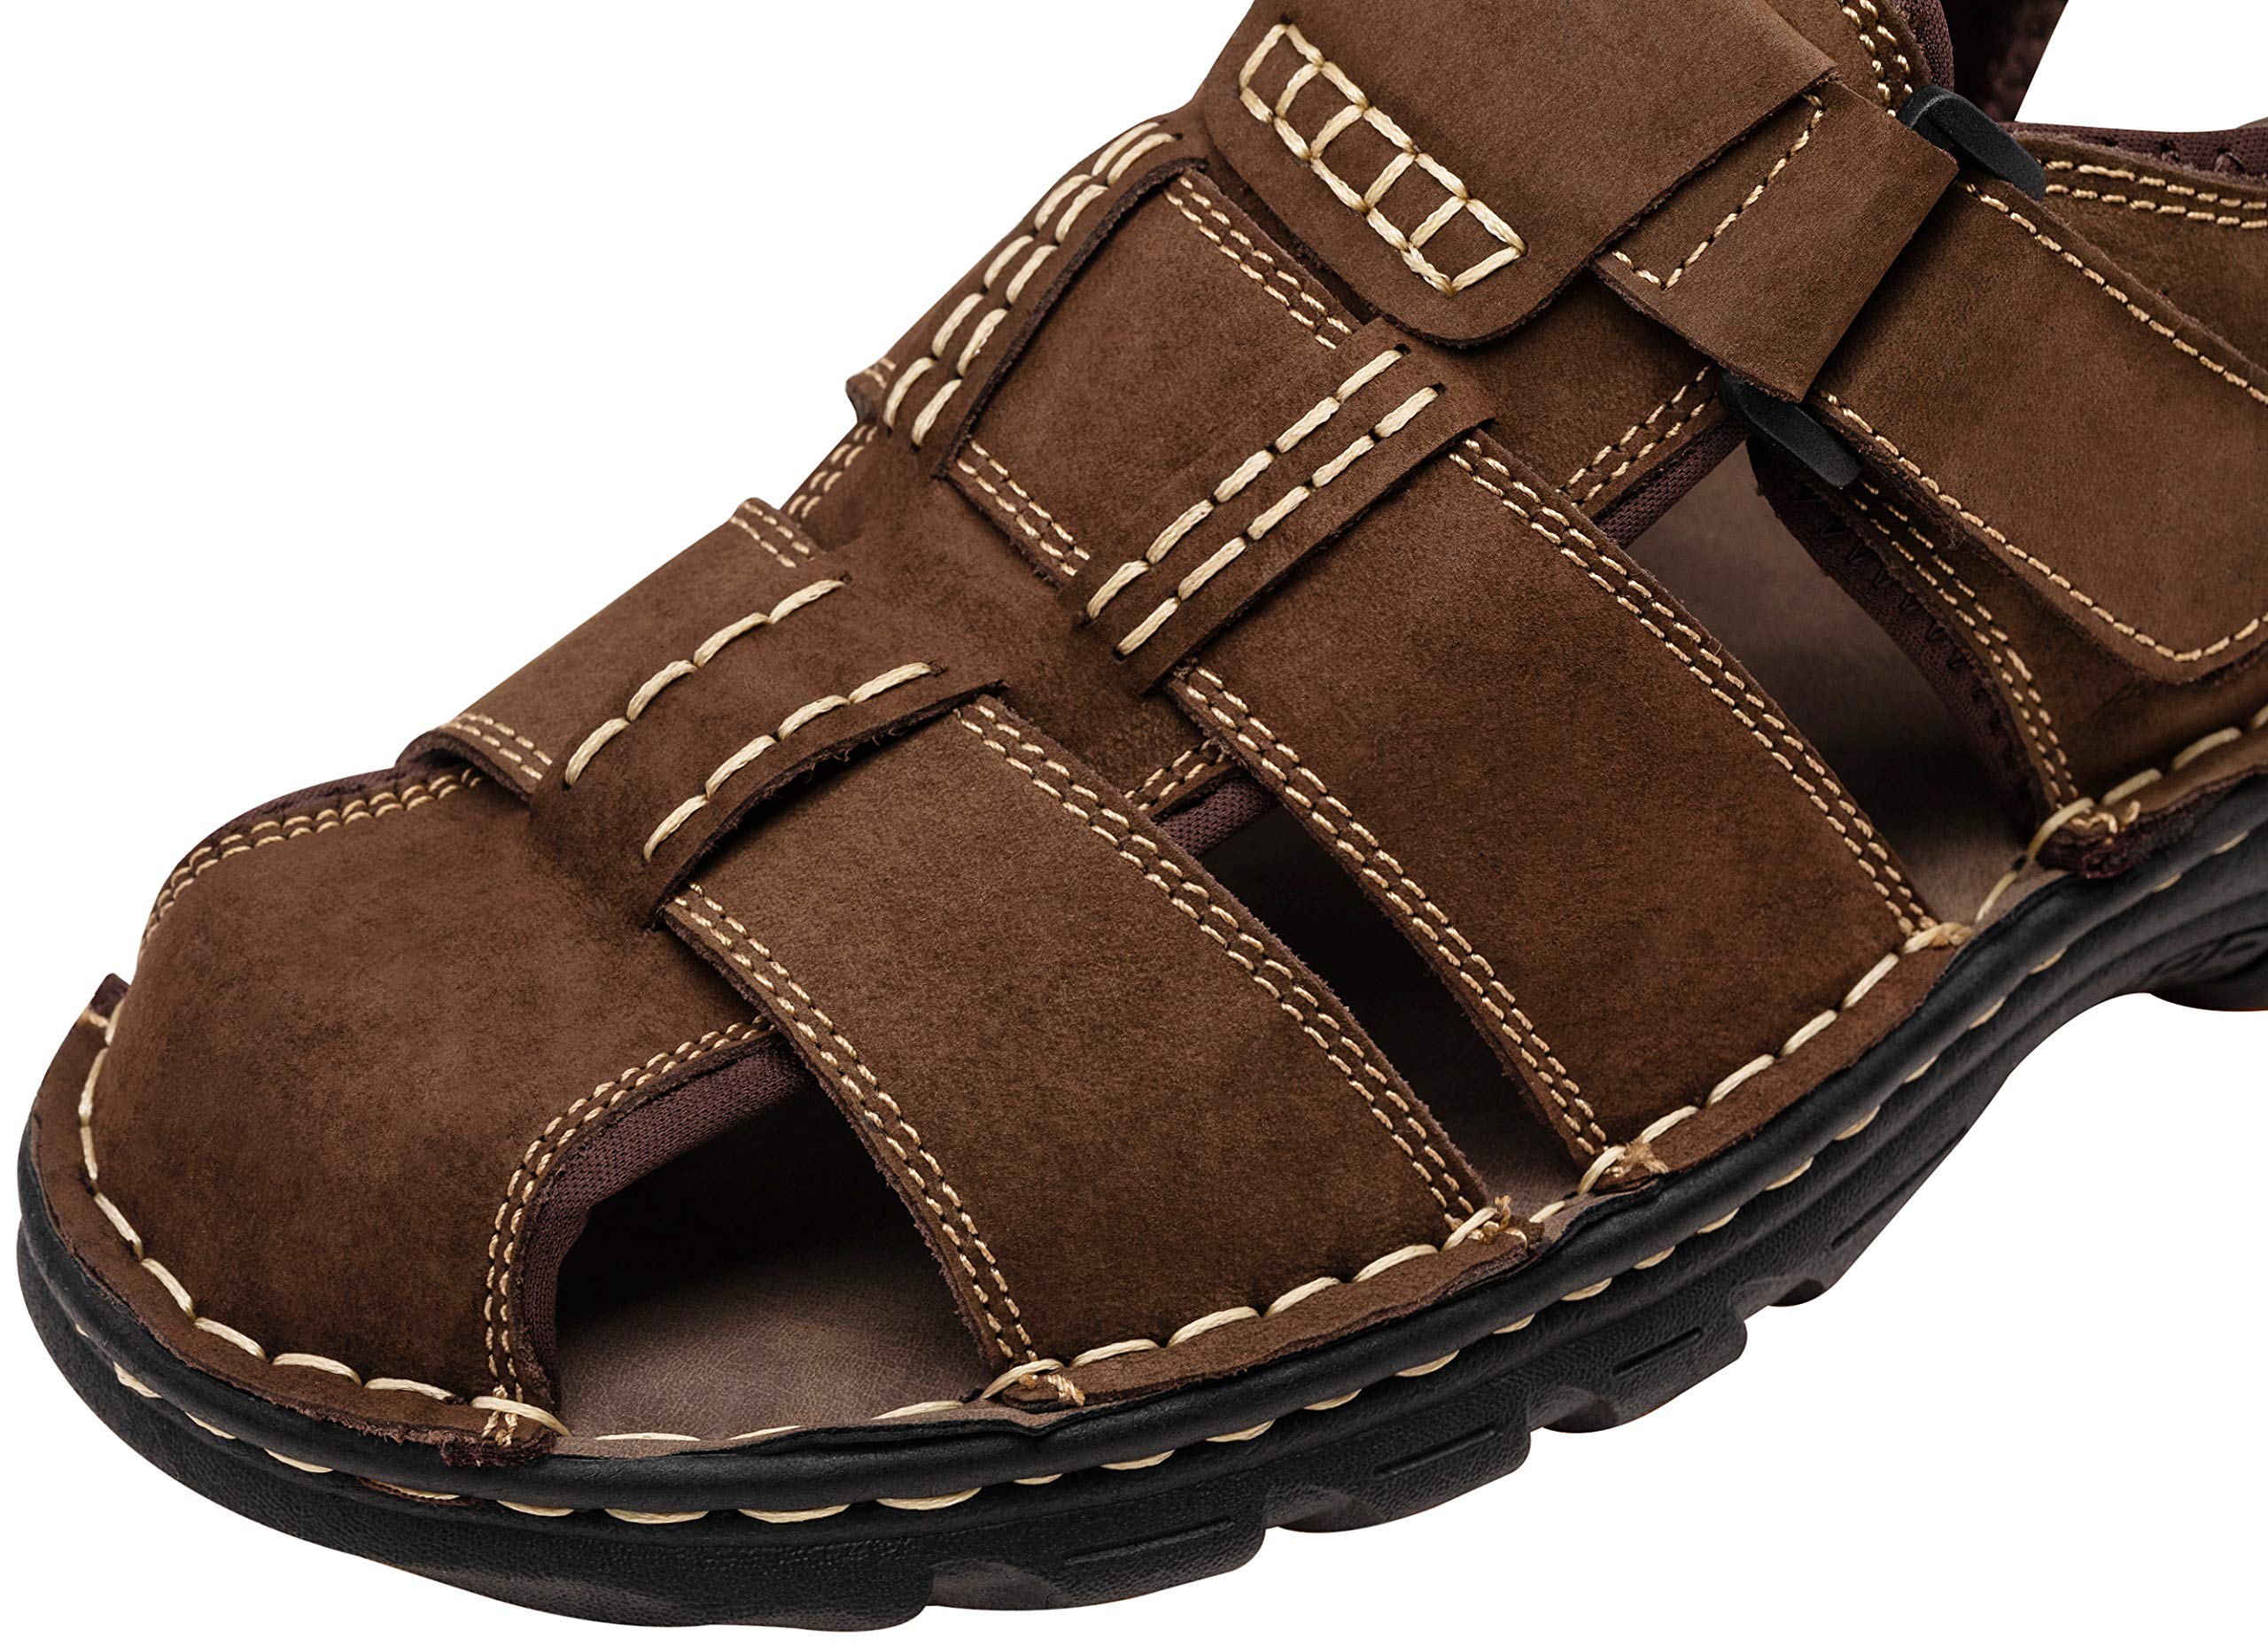 $11/mo - Finance Jousen Men's Sandals Leather Open Toe Beach Sandal ...